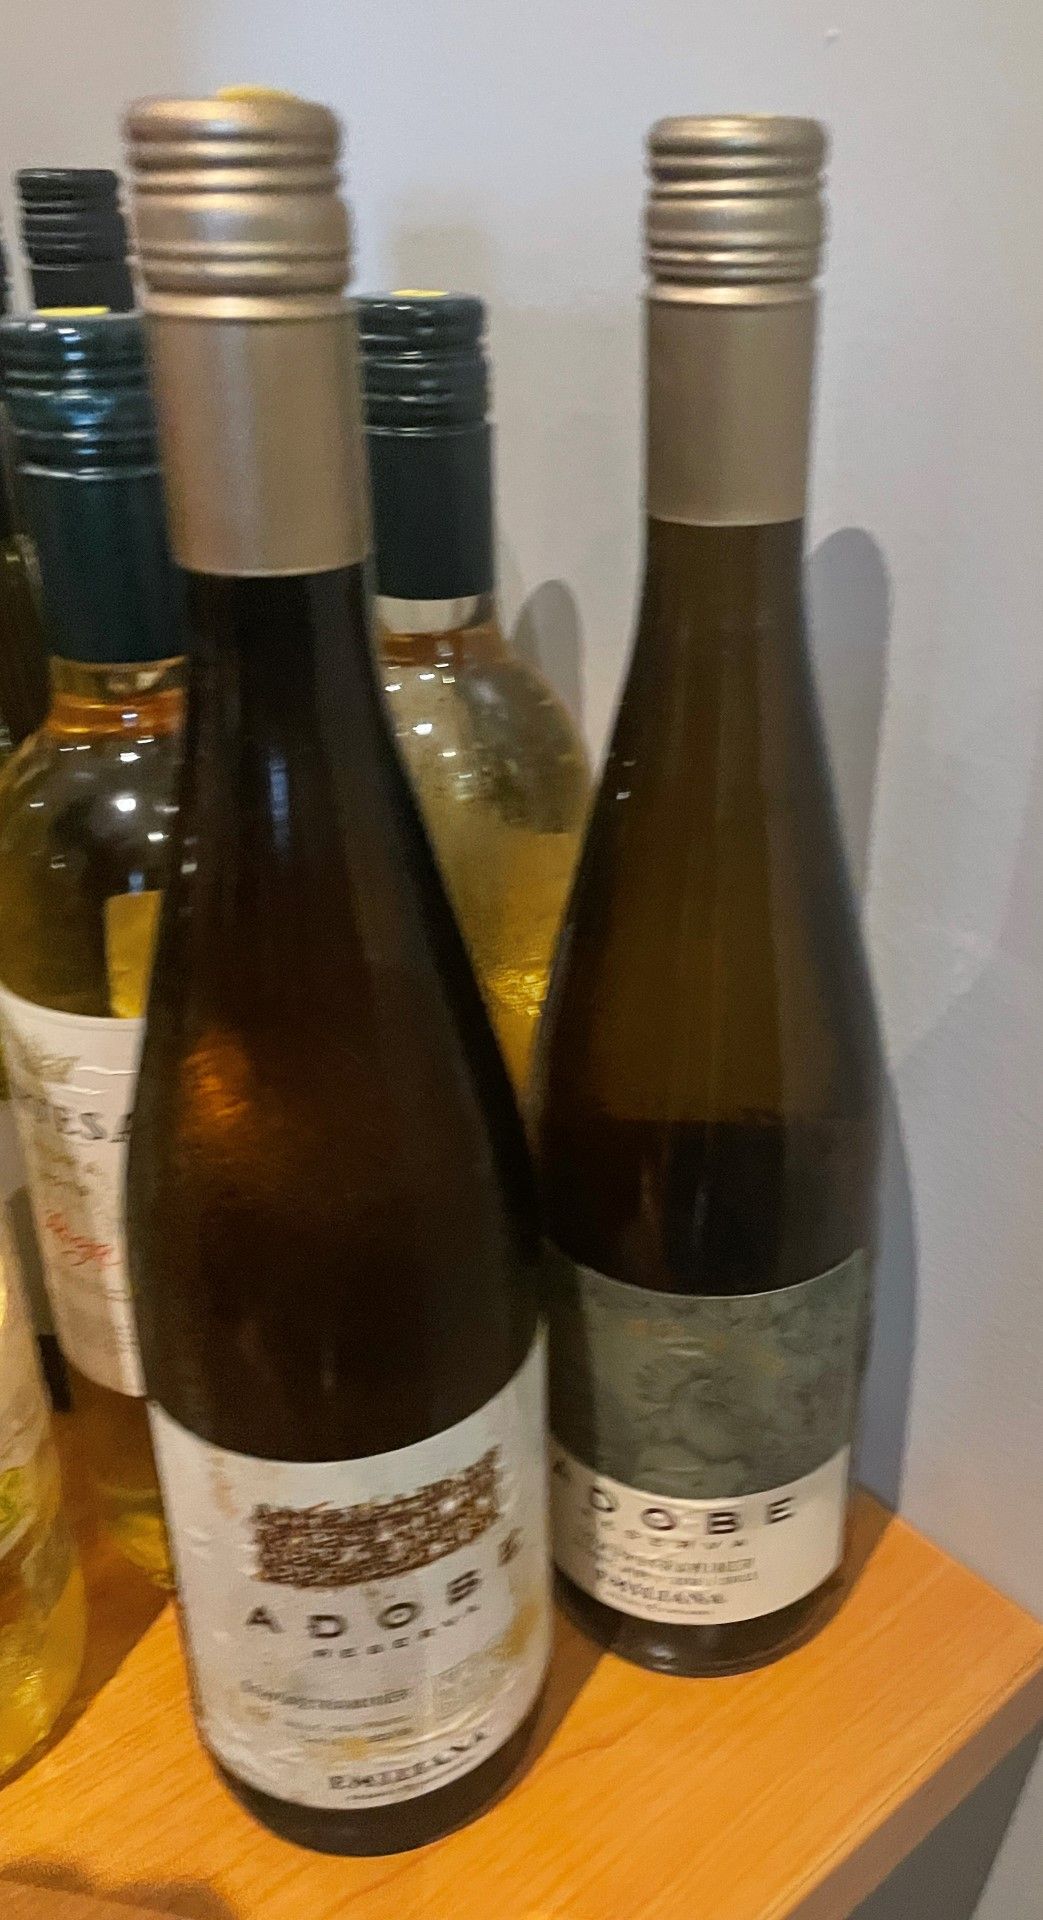 3 x Bottles of Emiliani Adobe Reserva Organic Wine - New / Unopened - Ref: JMR151 - CL782 -